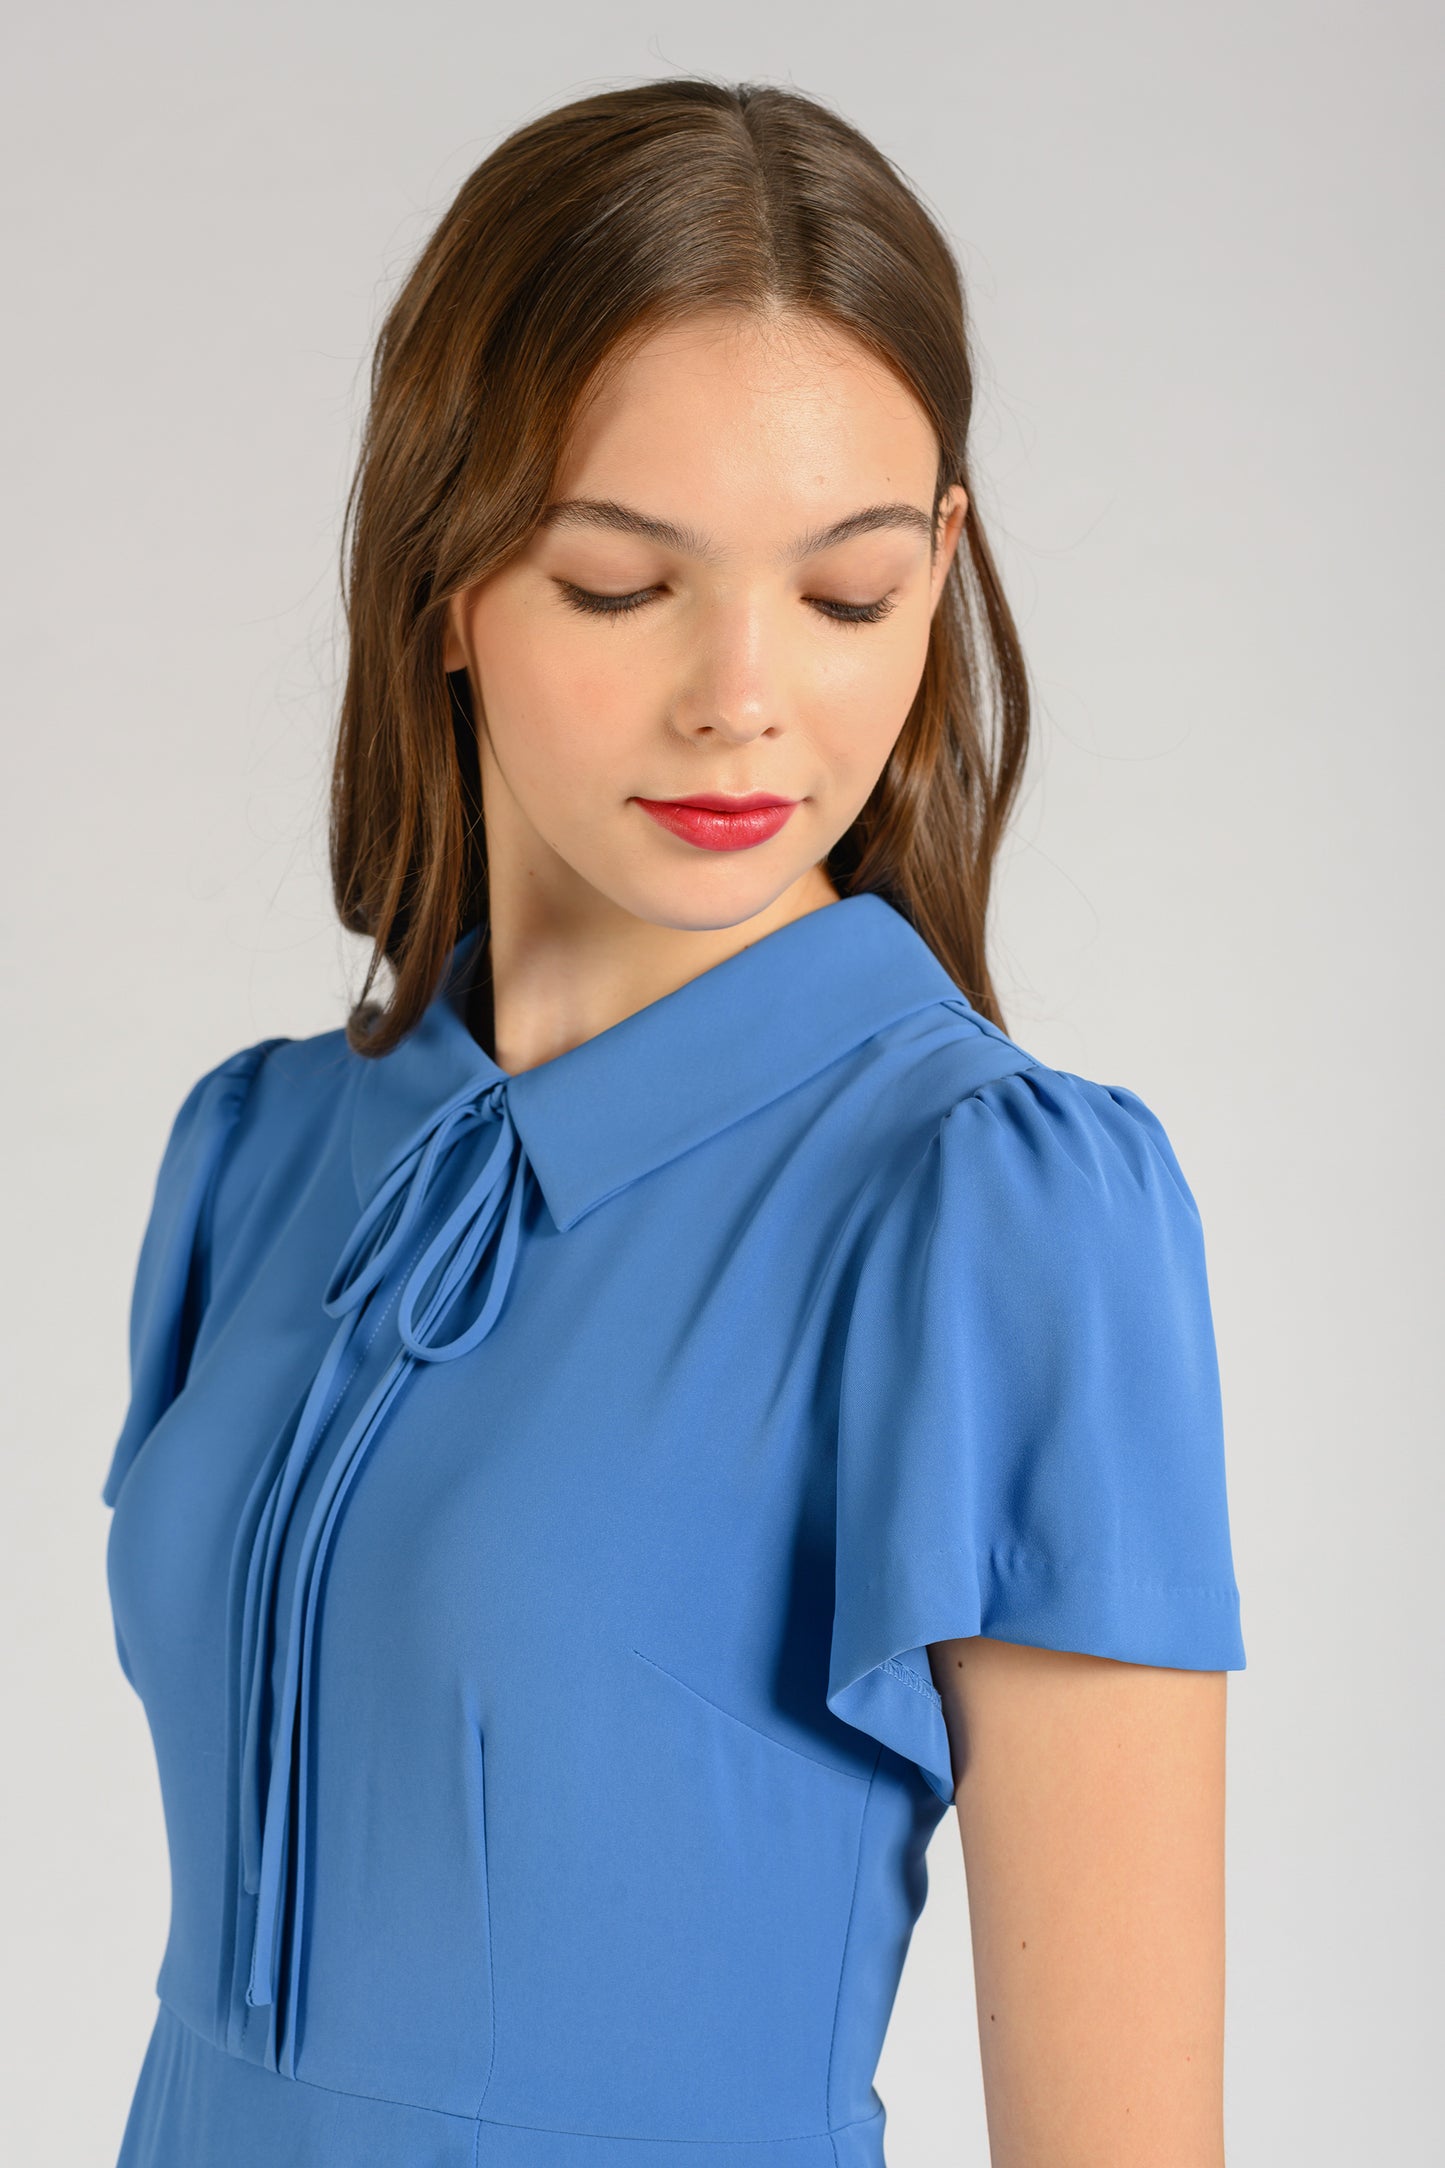 Tie Ribbon Pintuck Dress - Azure Blue